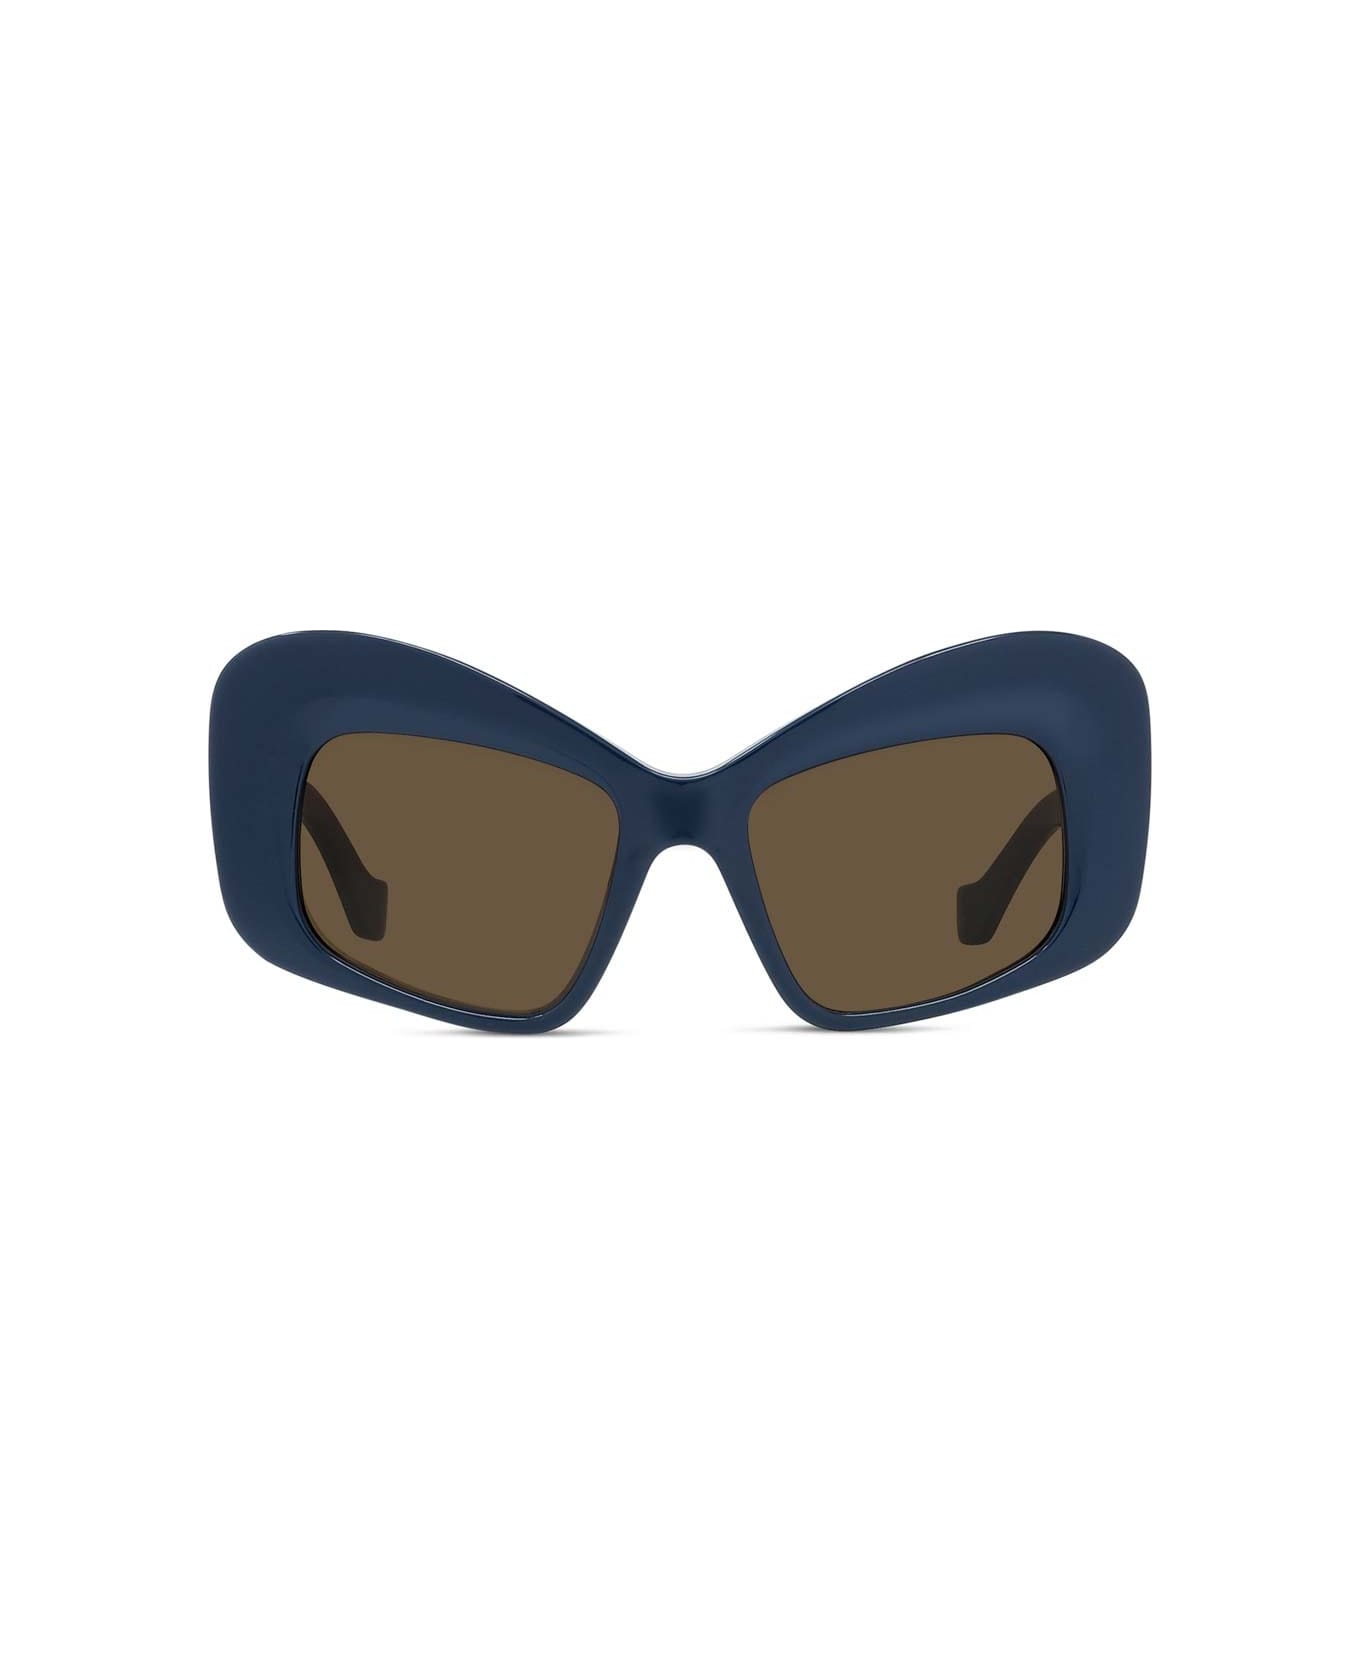 Loewe Sunglasses - Blu/Marrone